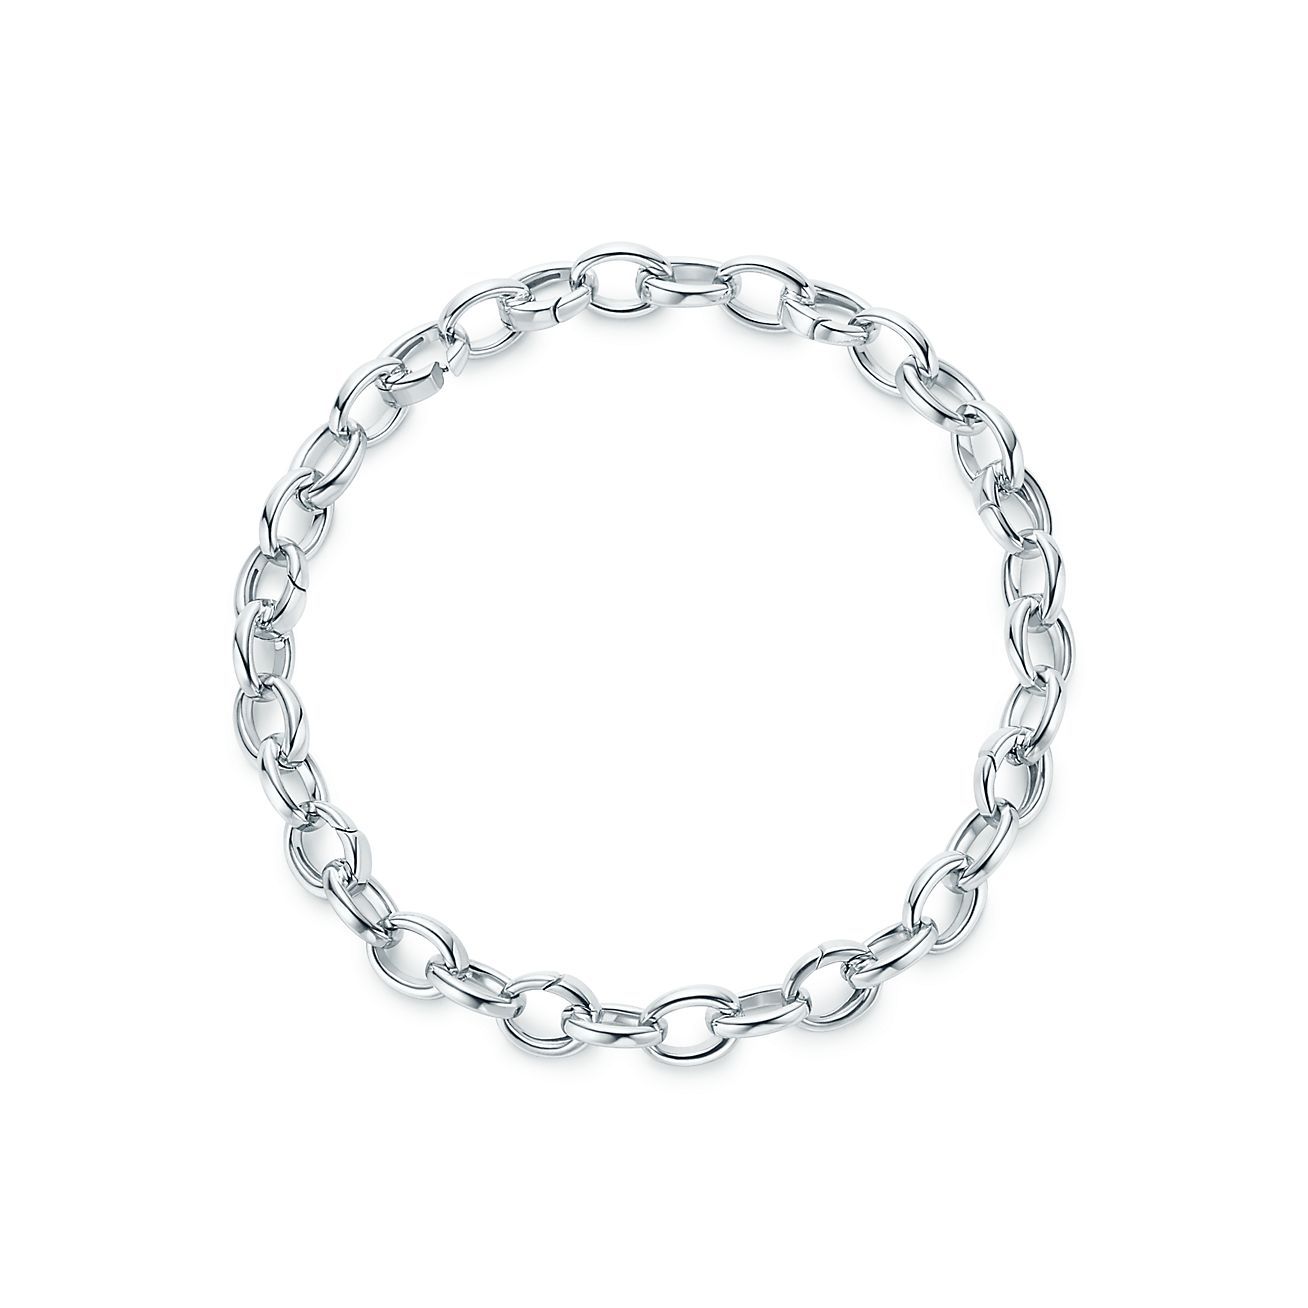 Oval link bracelet in sterling silver 